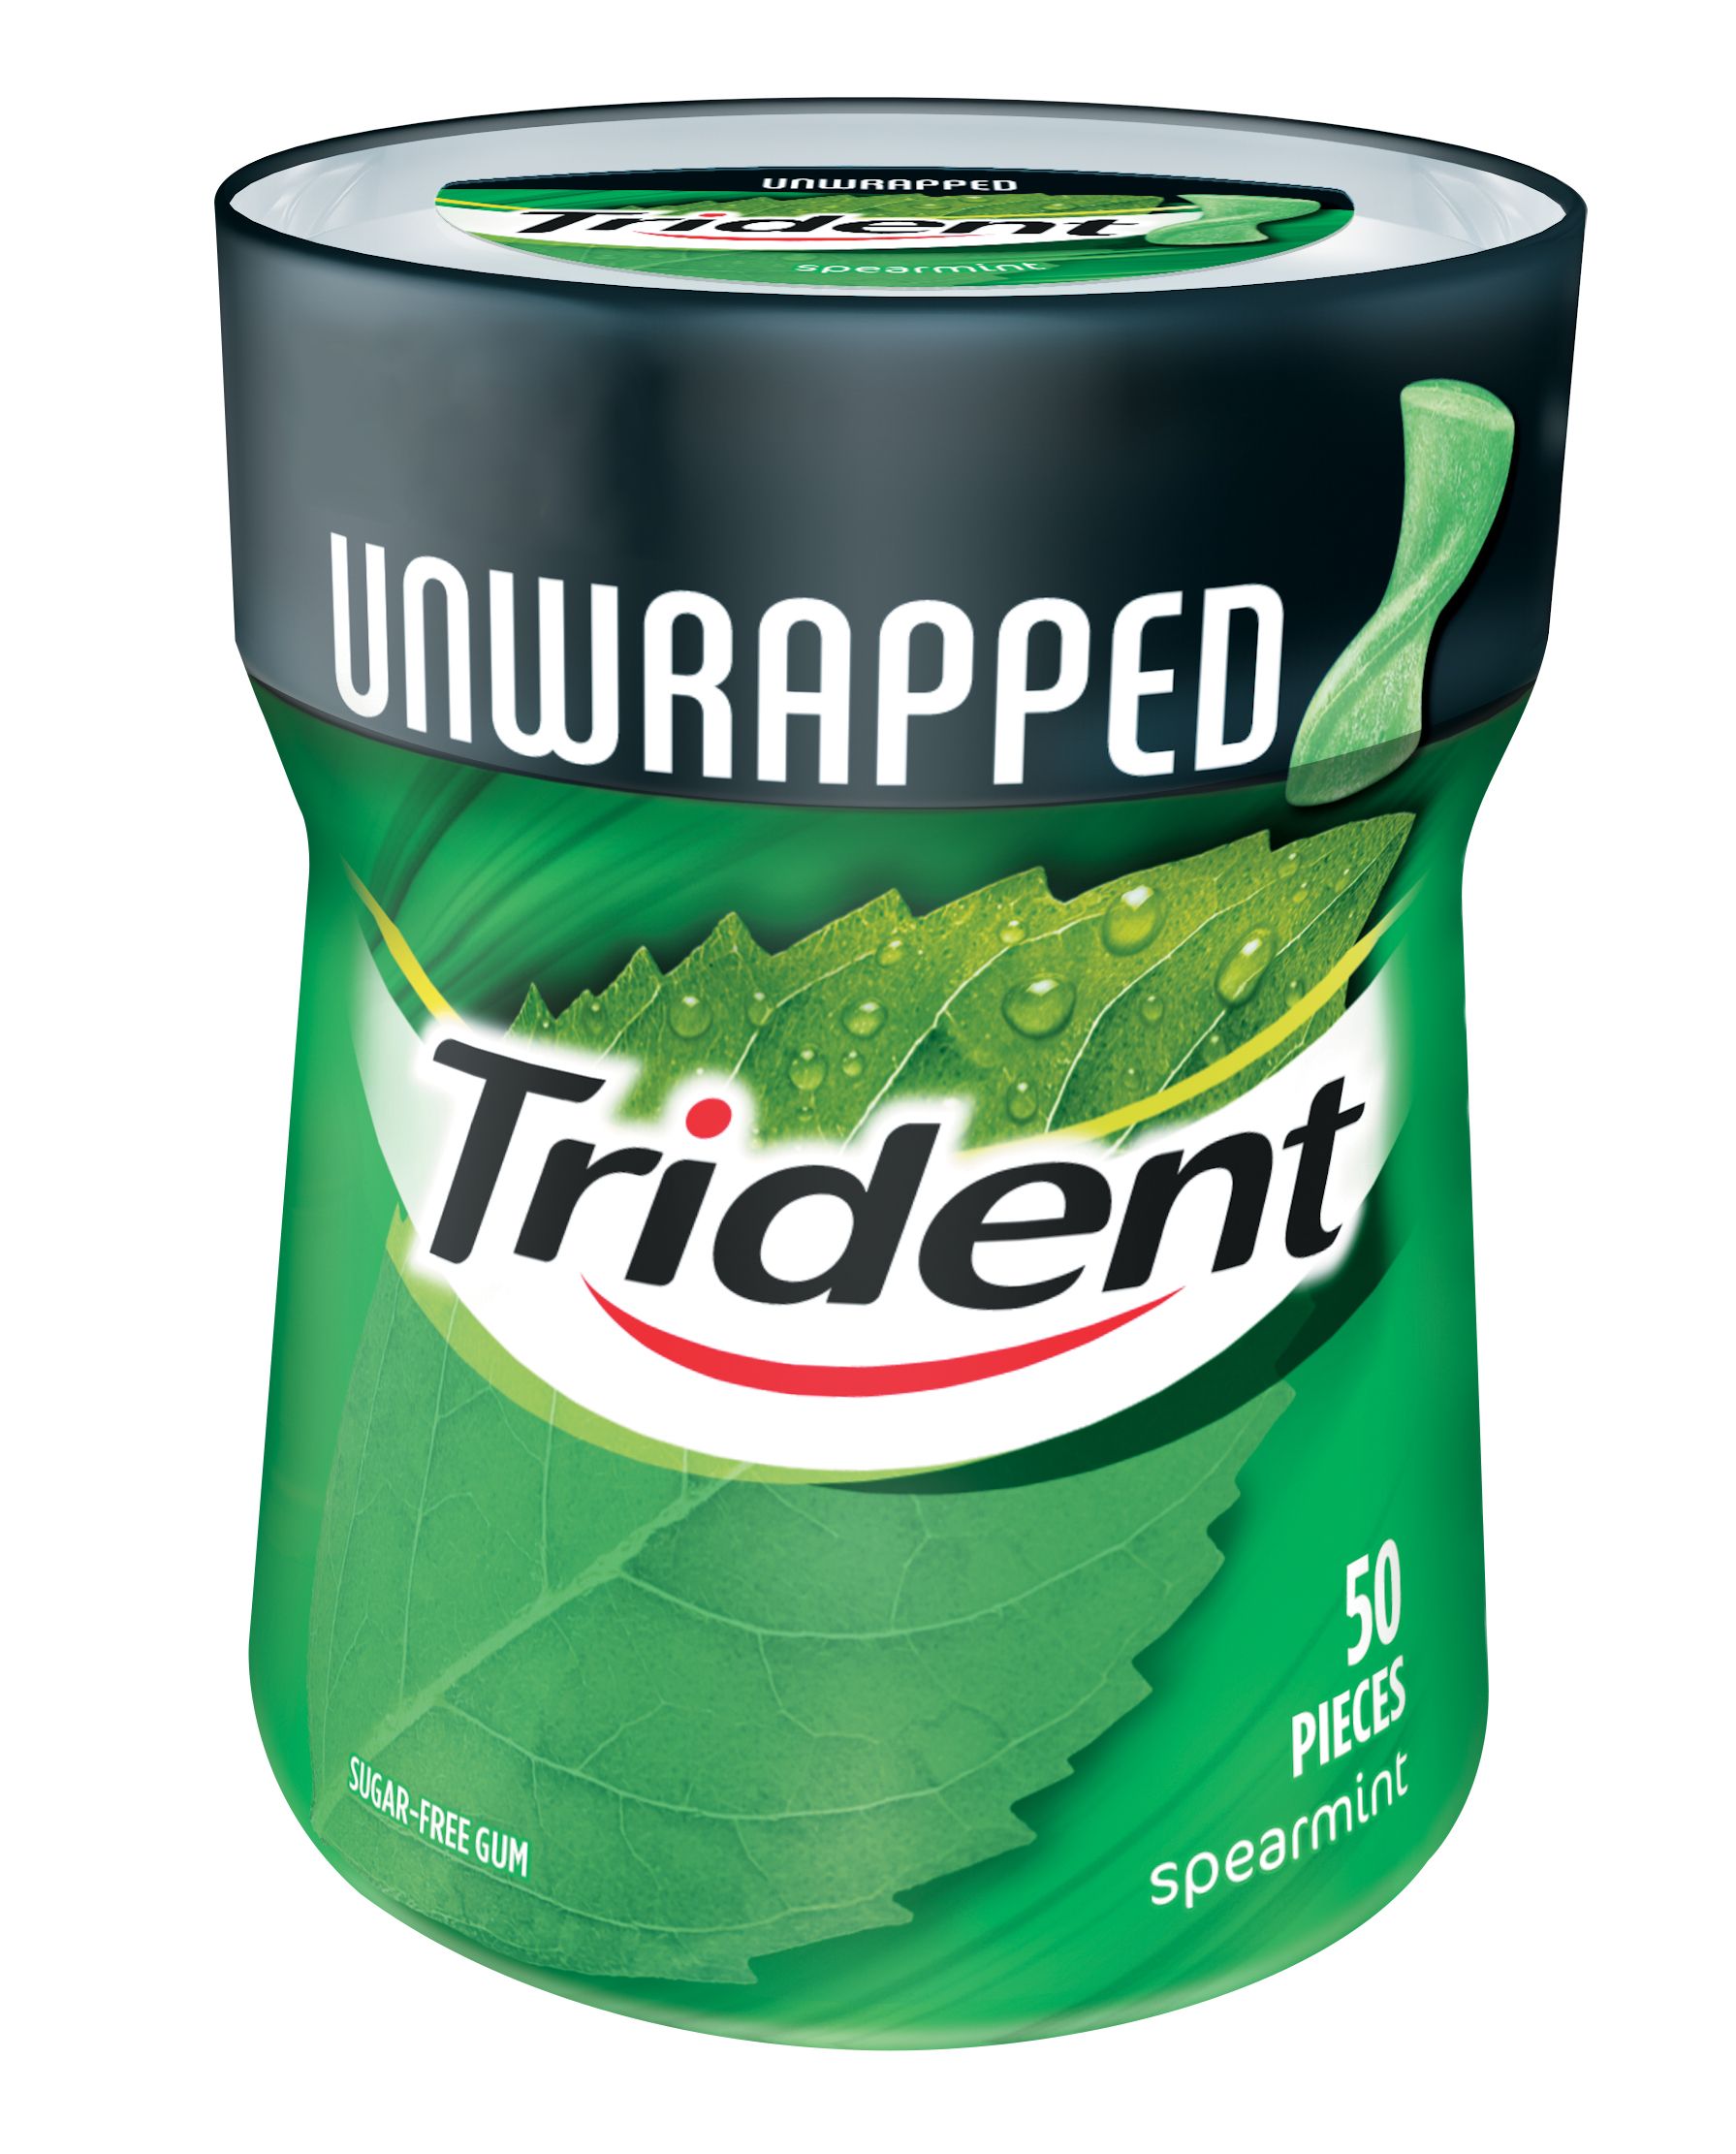 Trident Spearmint Gum 50 Count